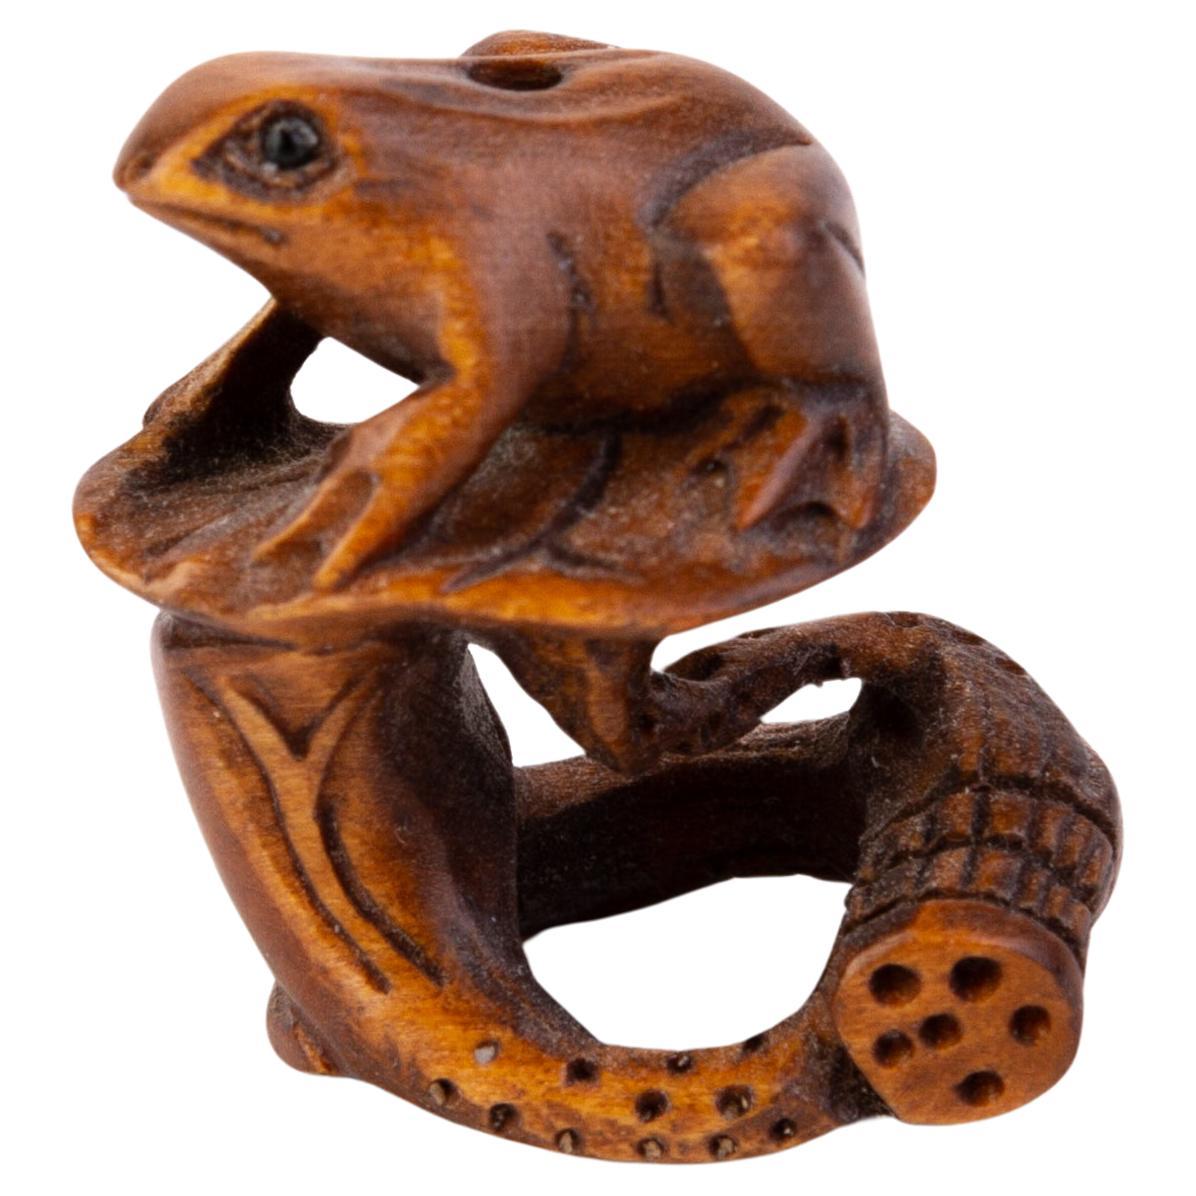 Signed Japanese Carved Wood Netsuke Inro Frog